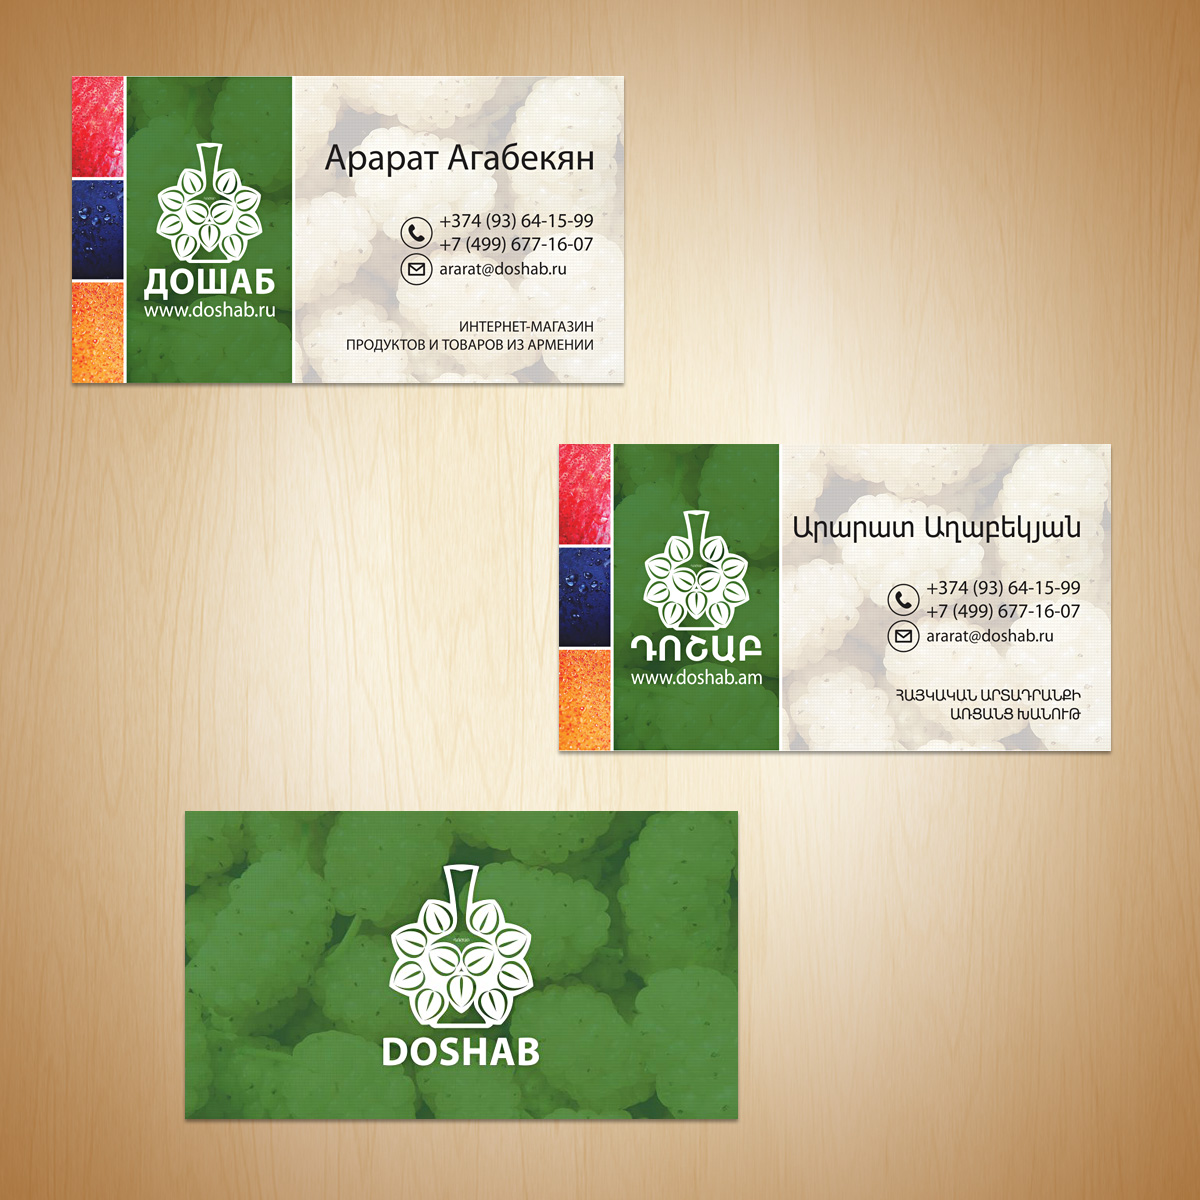 DOSHAB.ru Promo-Poster, Label & Business Card Design for Doshab.ru